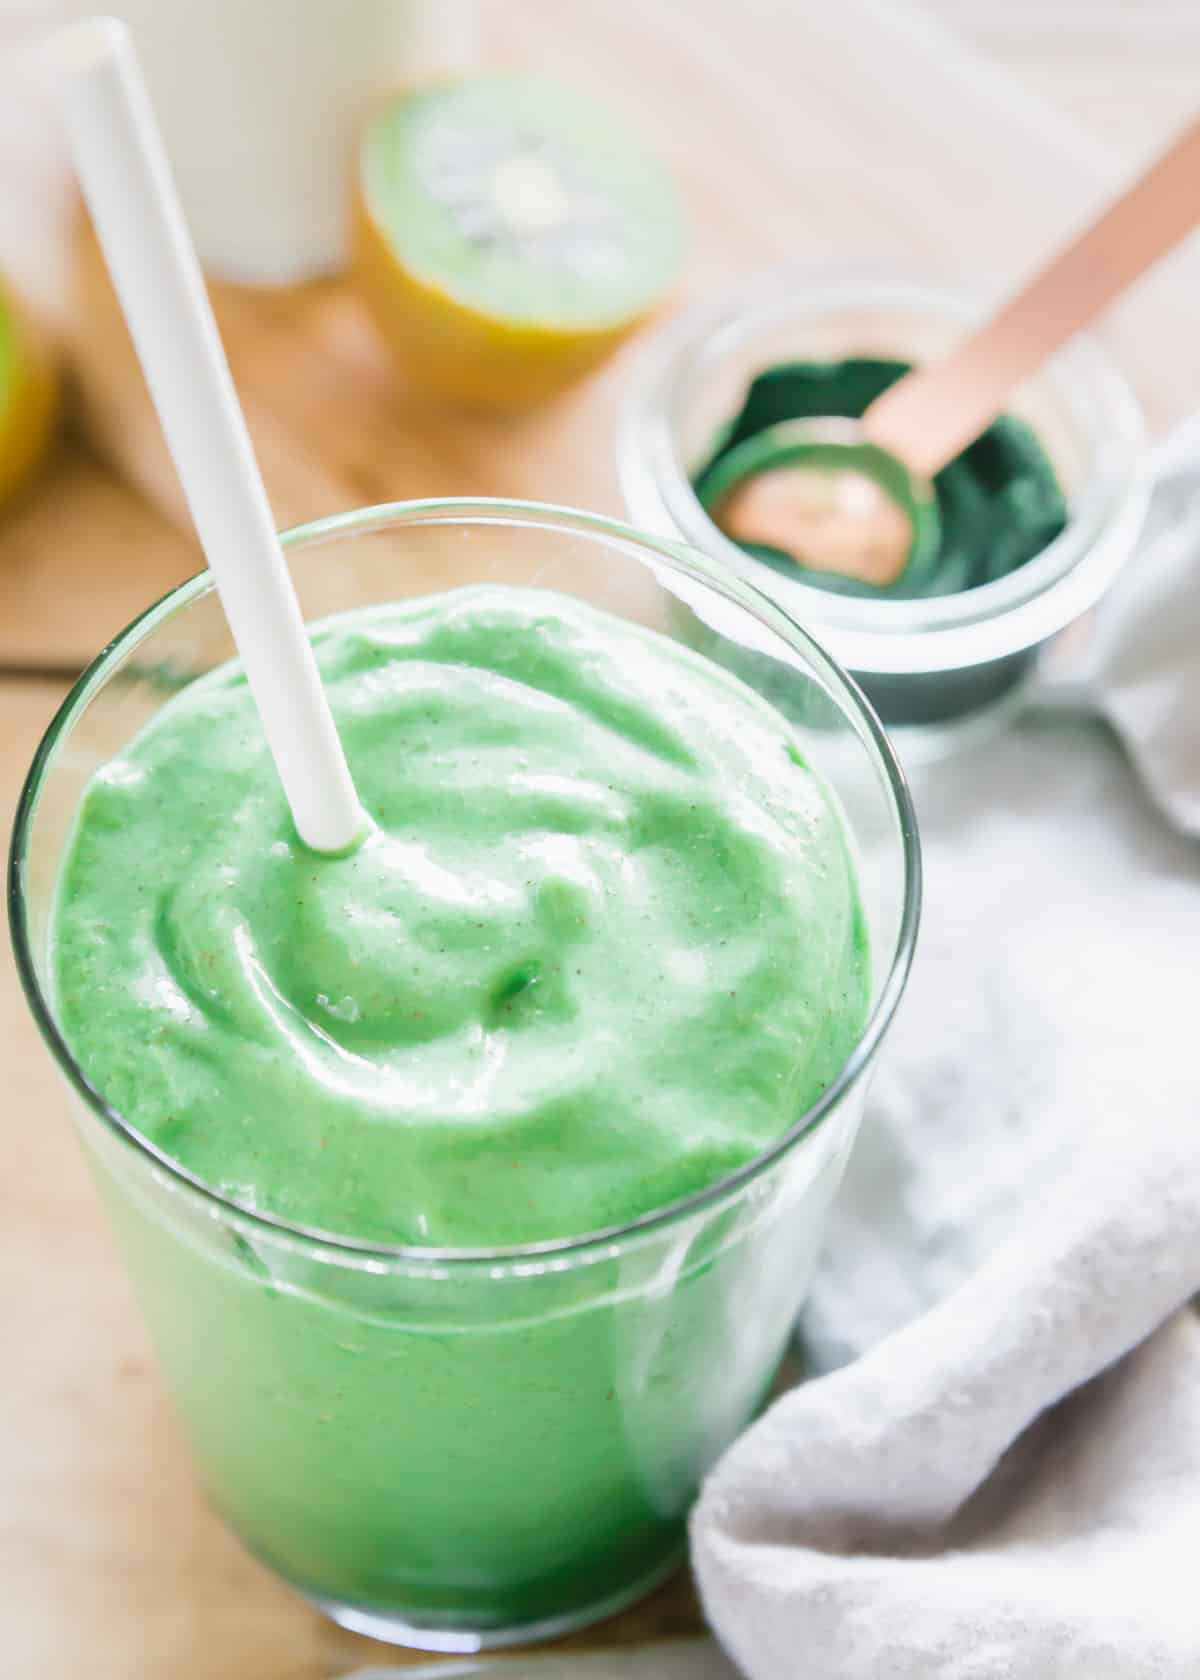 spirulina smoothie recipe using 1 teaspoon green spirulina powder with banana, mango, kiwi and baby greens